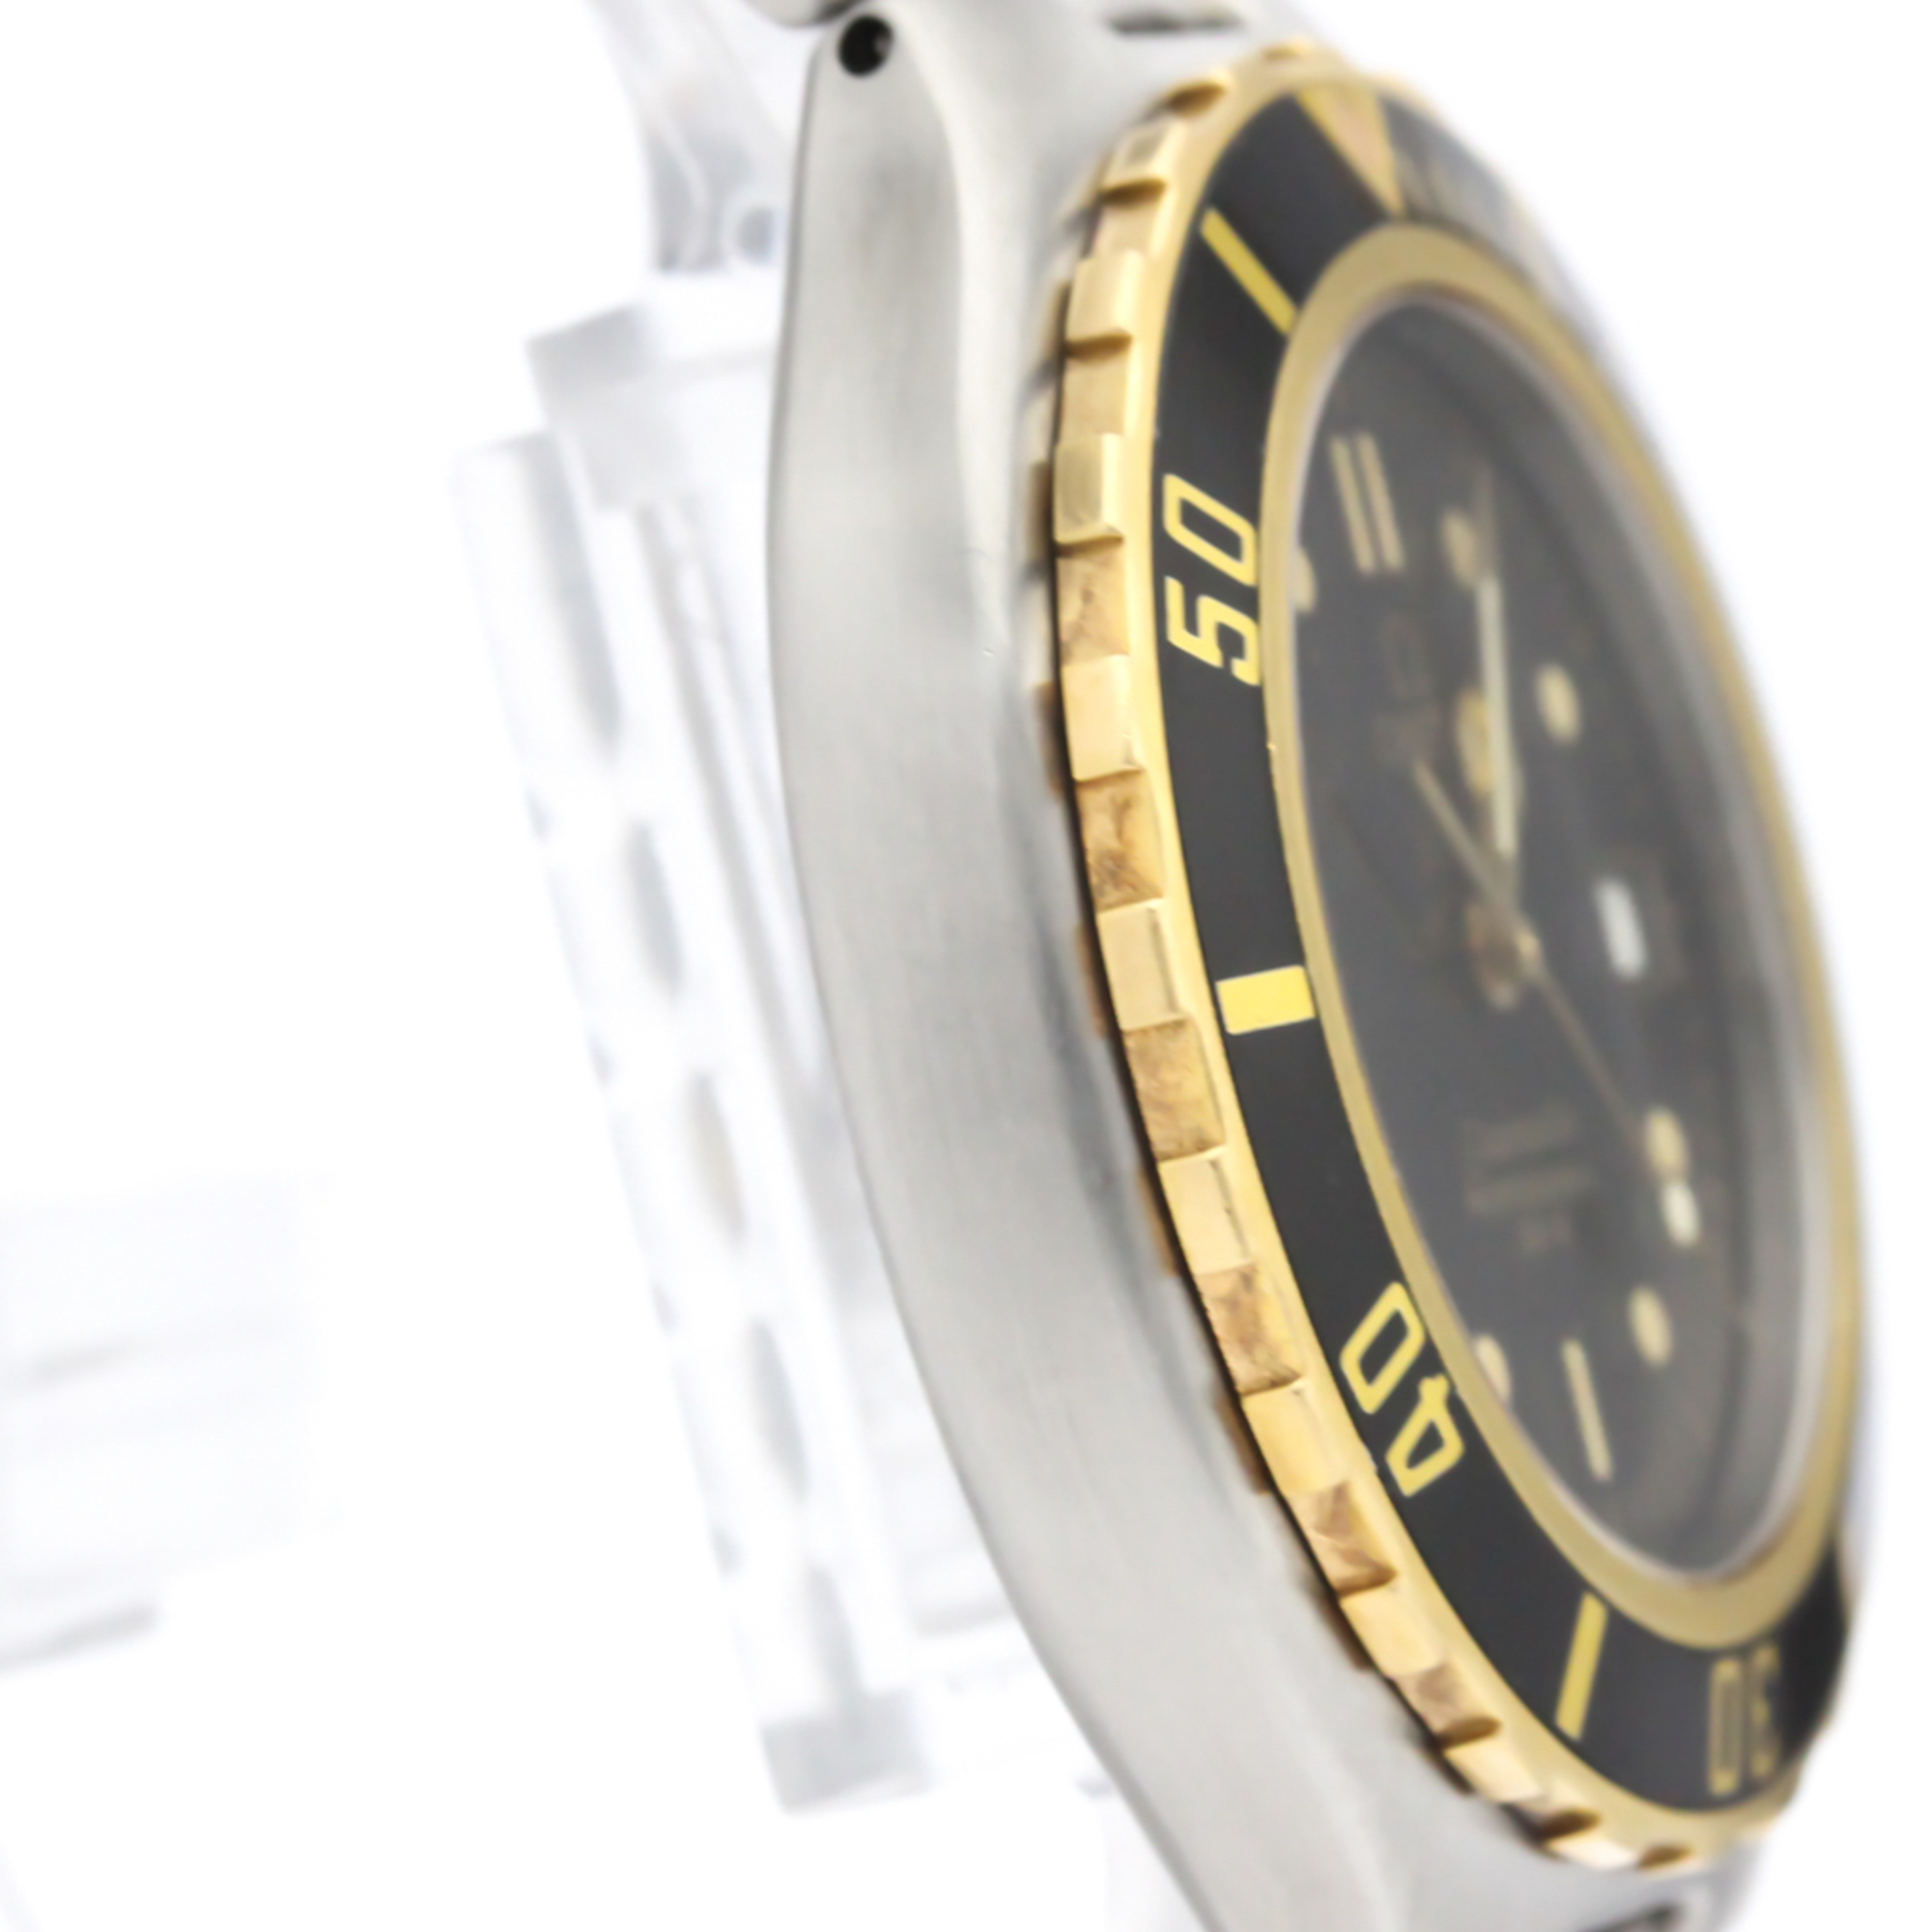 OMEGA Seamaster Professional 18K Gold Steel Watch 396.1042